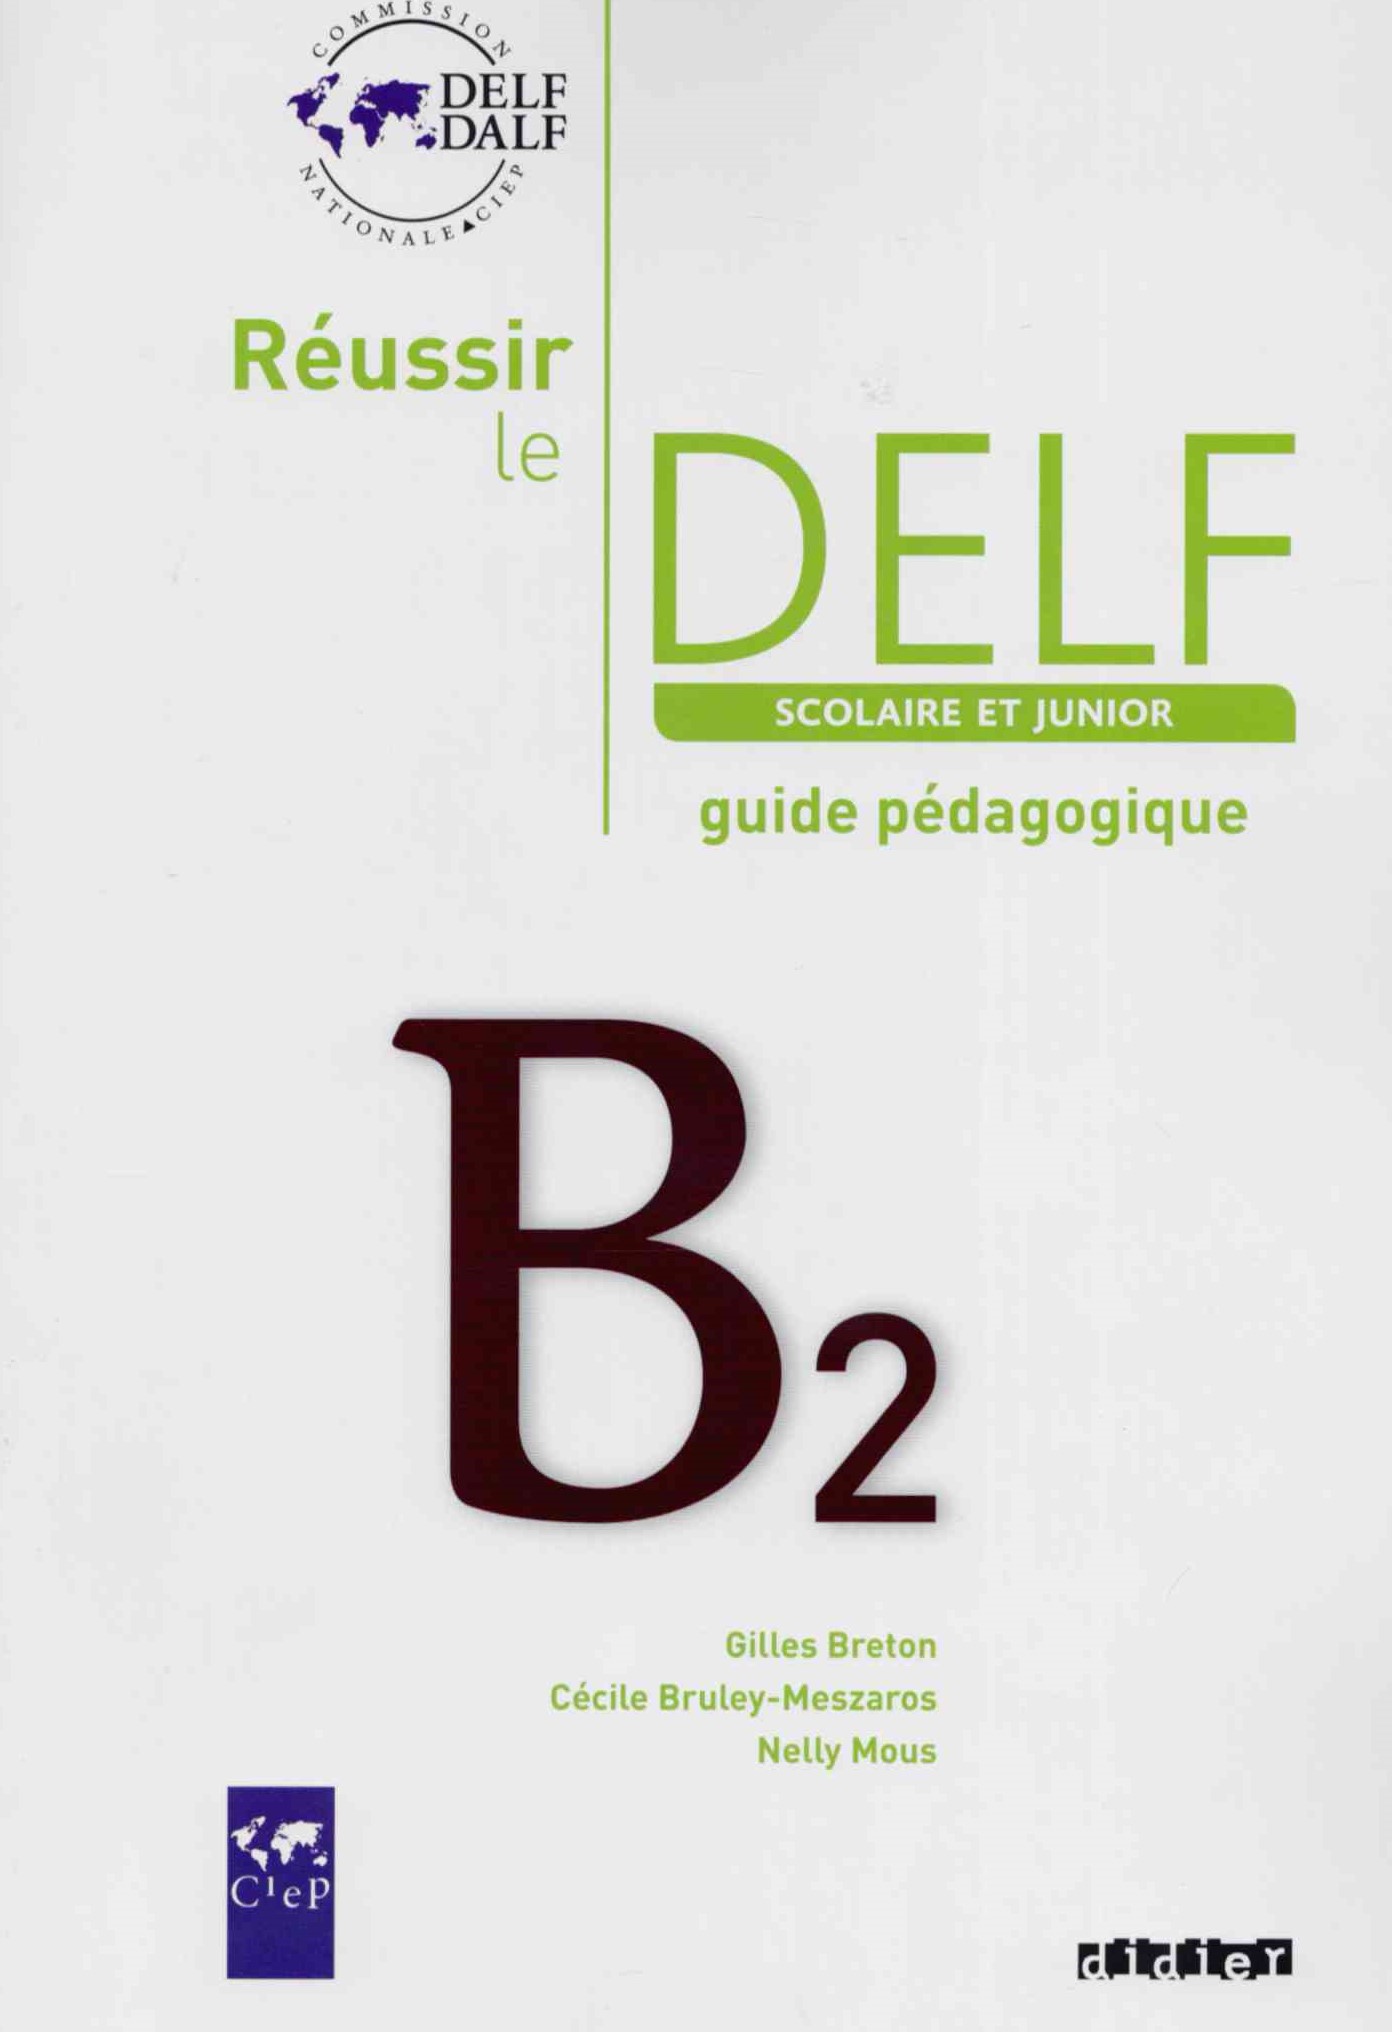 Reussir le DELF Scolaire et junior B2 Guide pedagogique / Книга для учителя